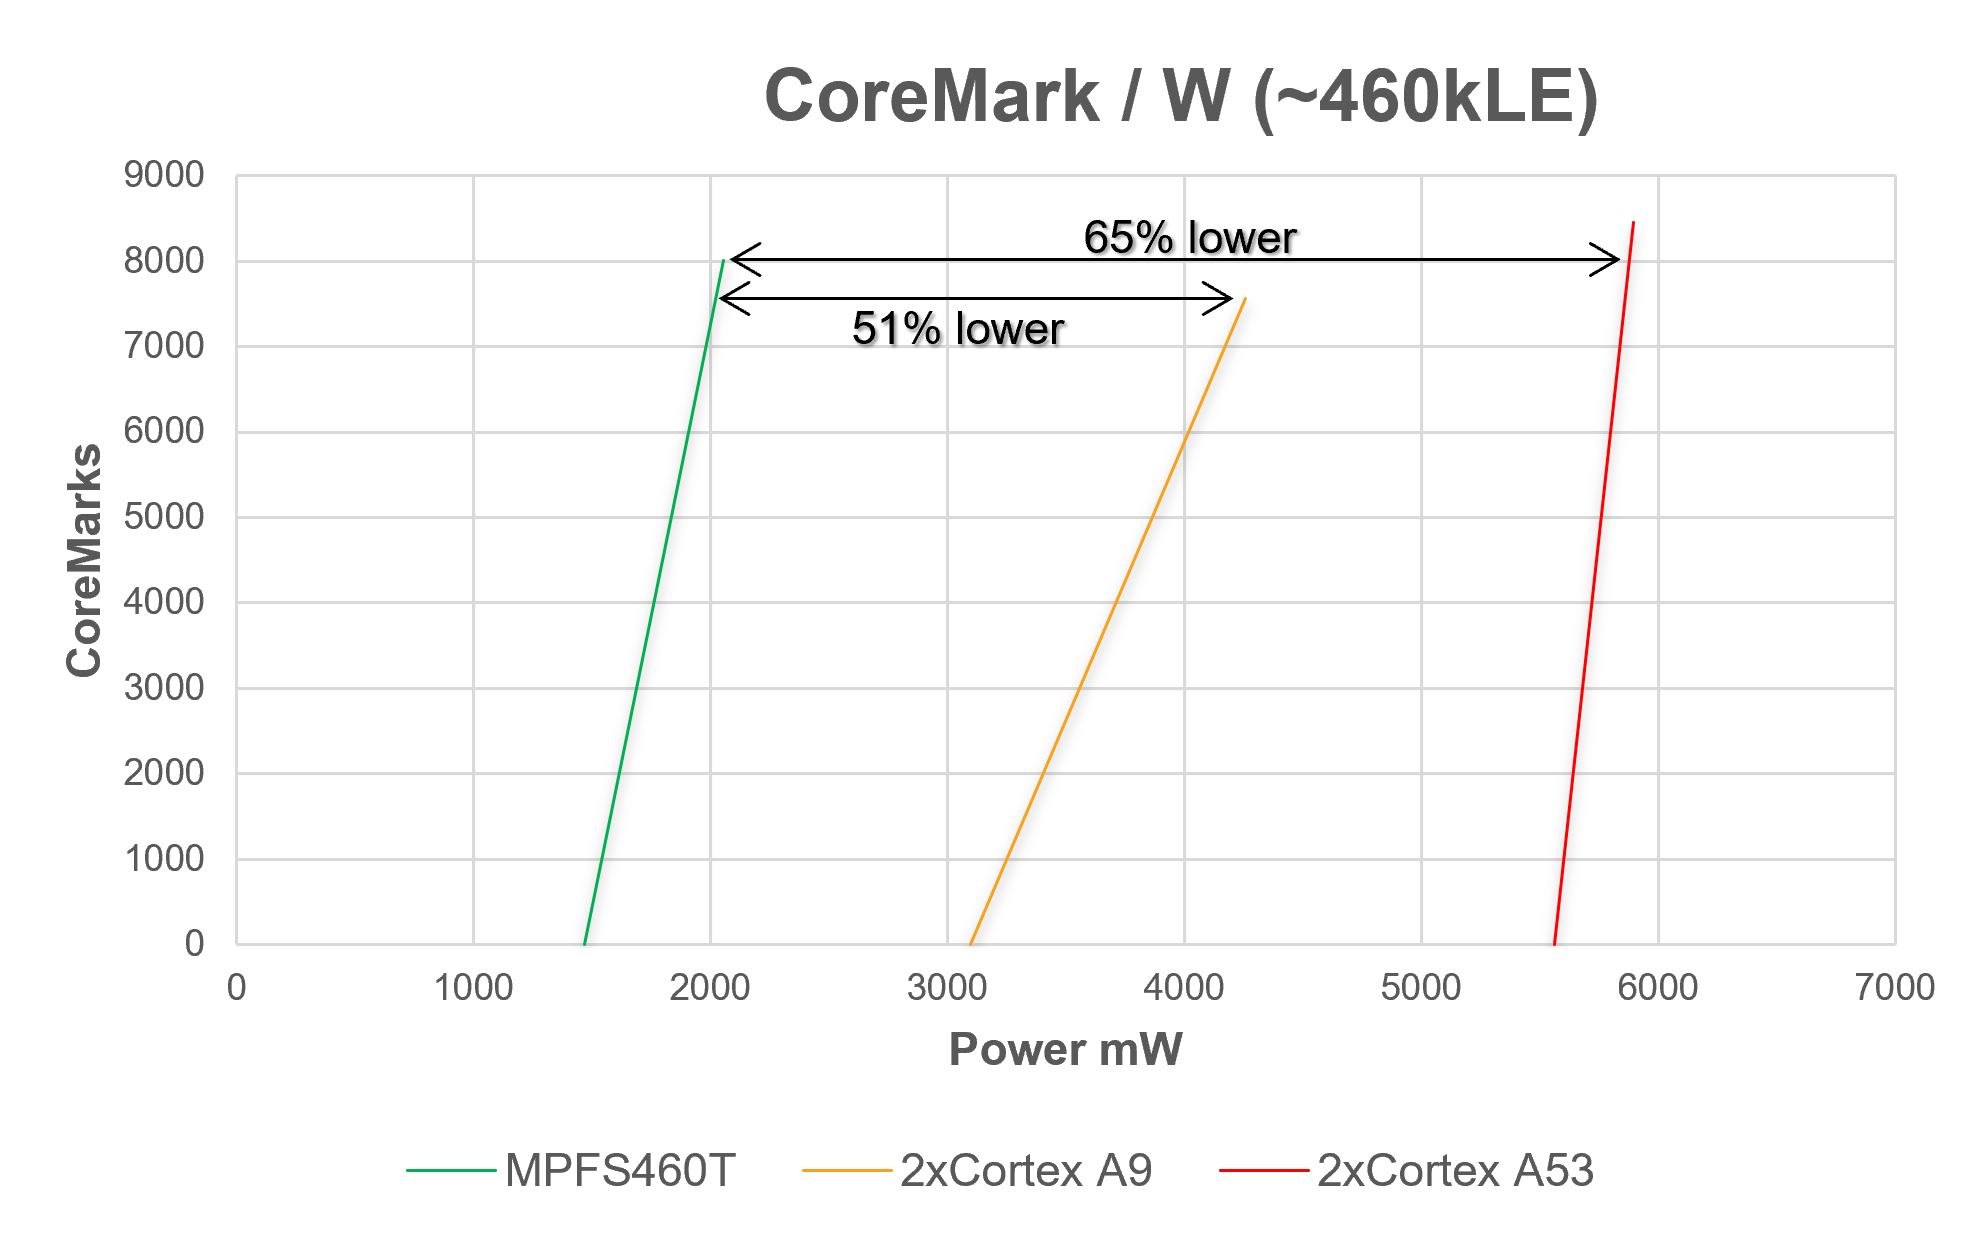 CoreMark per watt for 460kLE